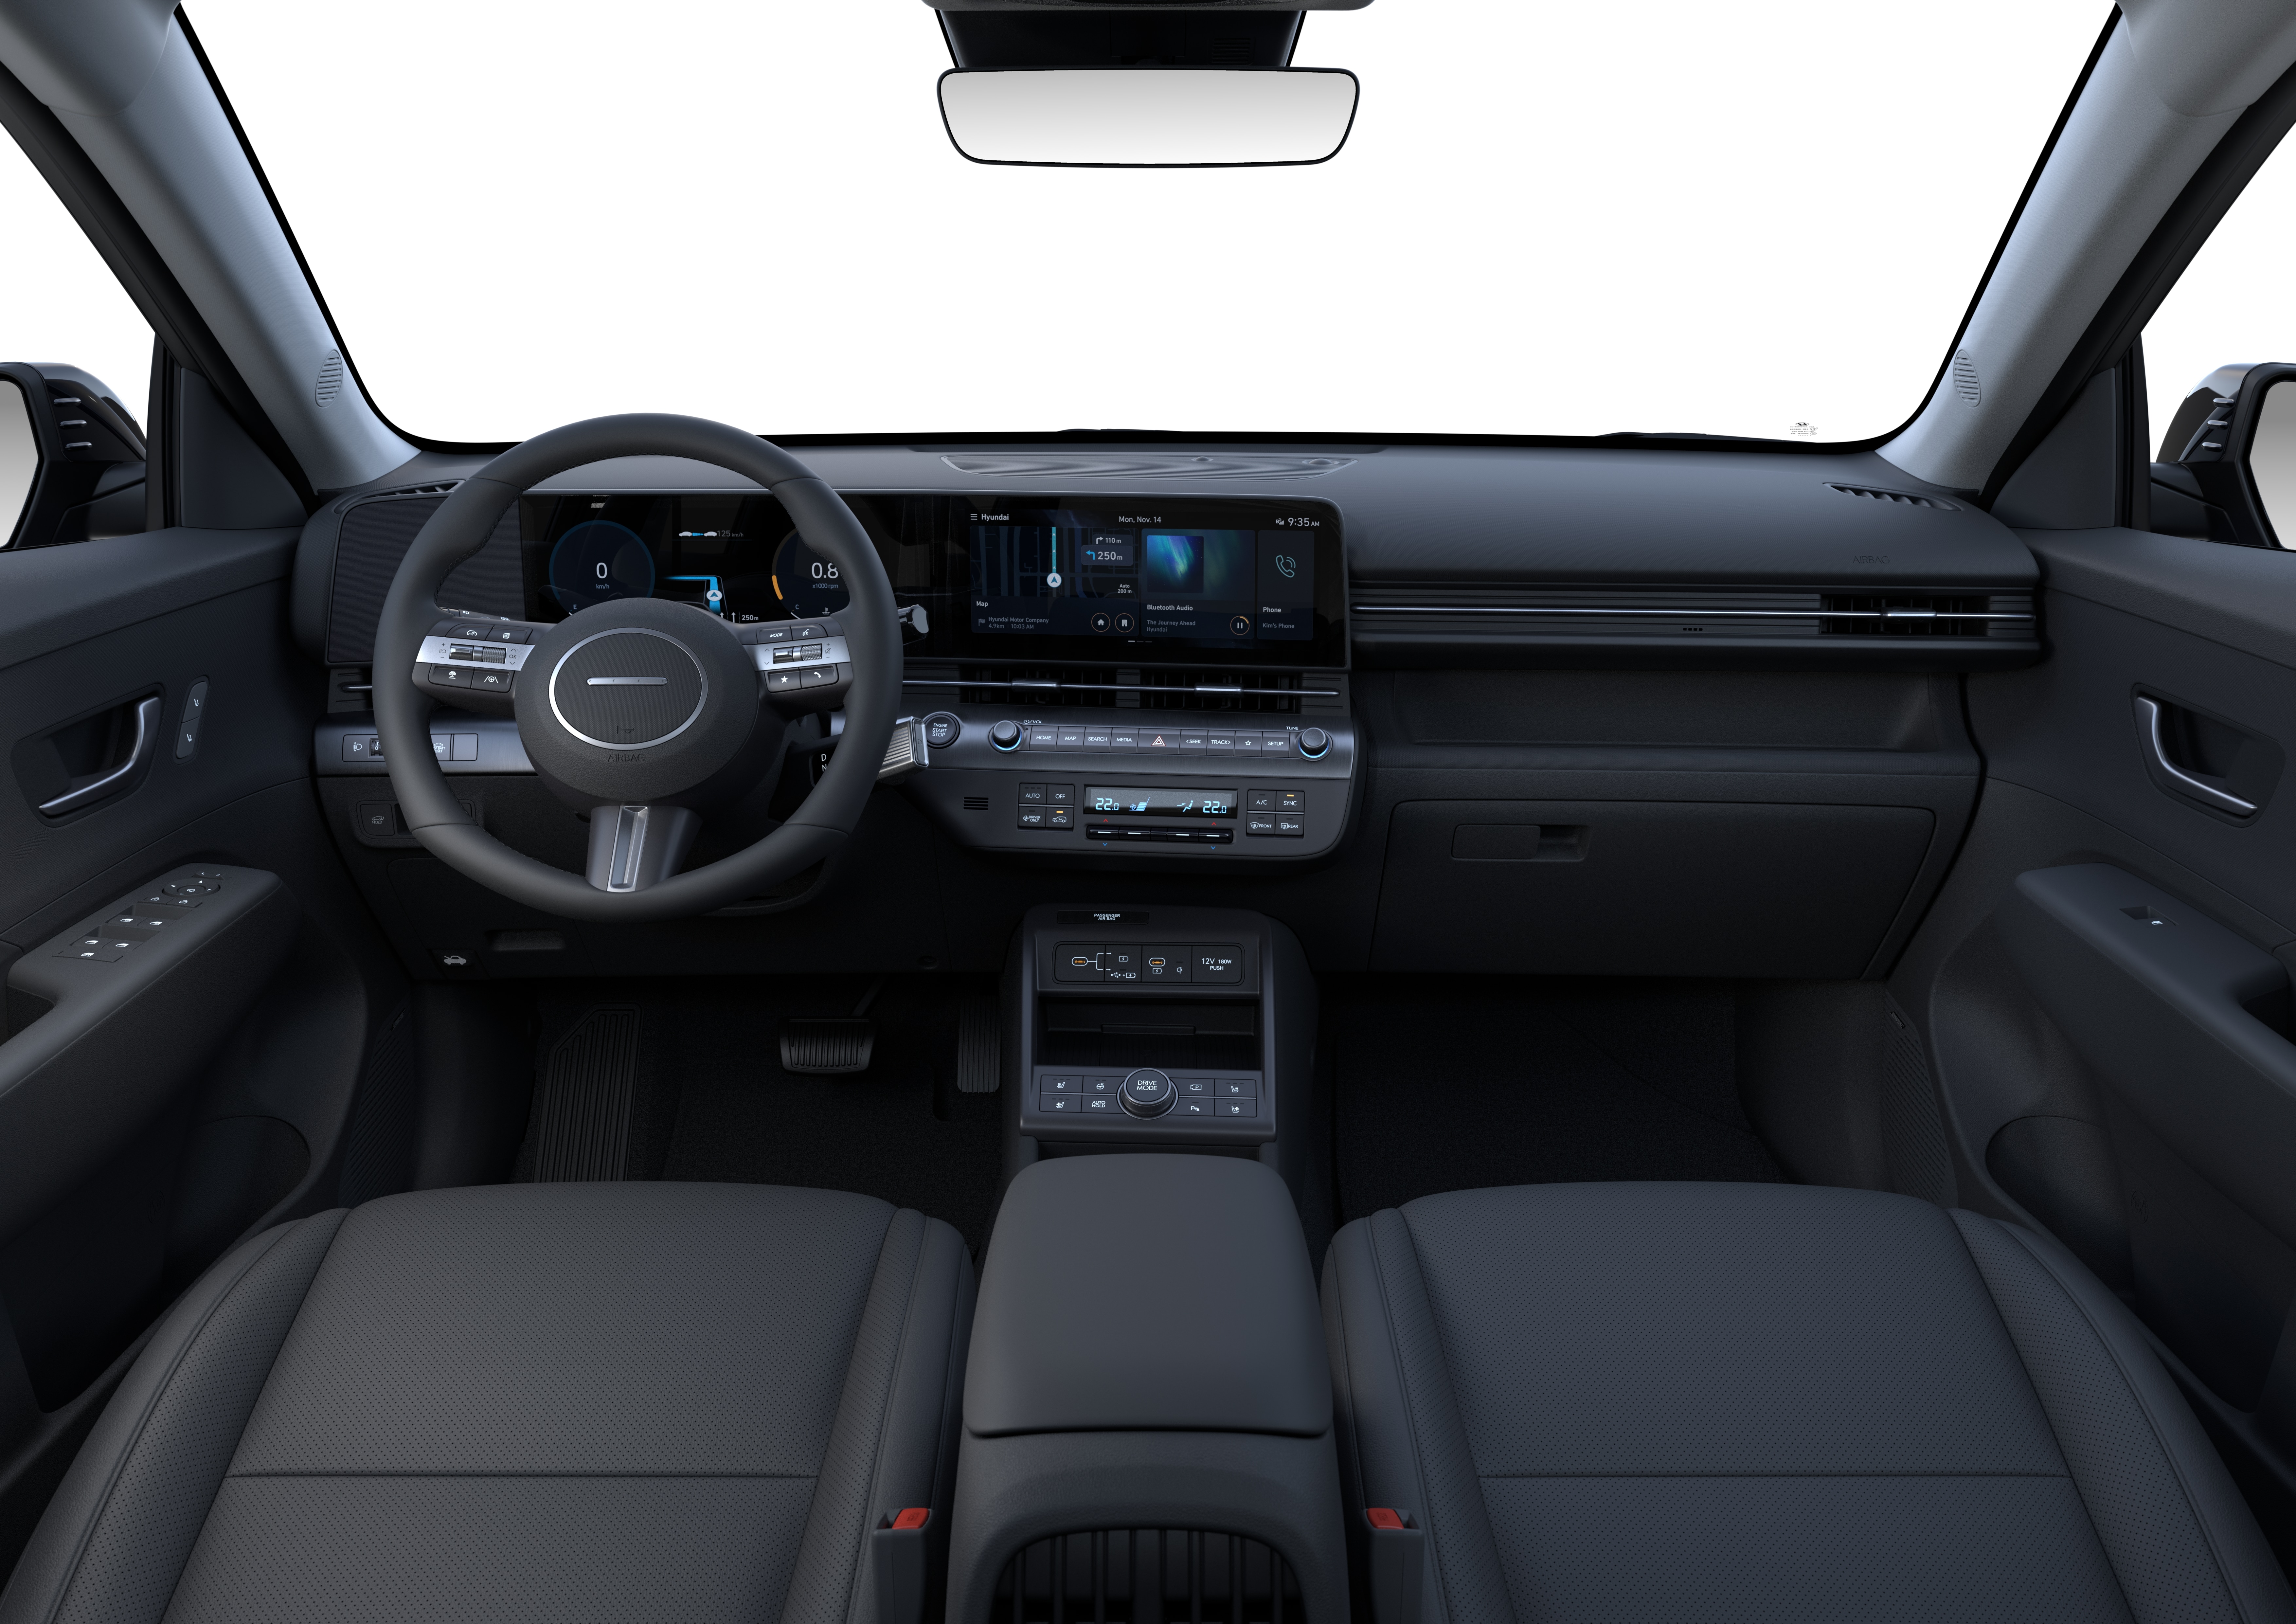 The inside view of the Hyundai KONA